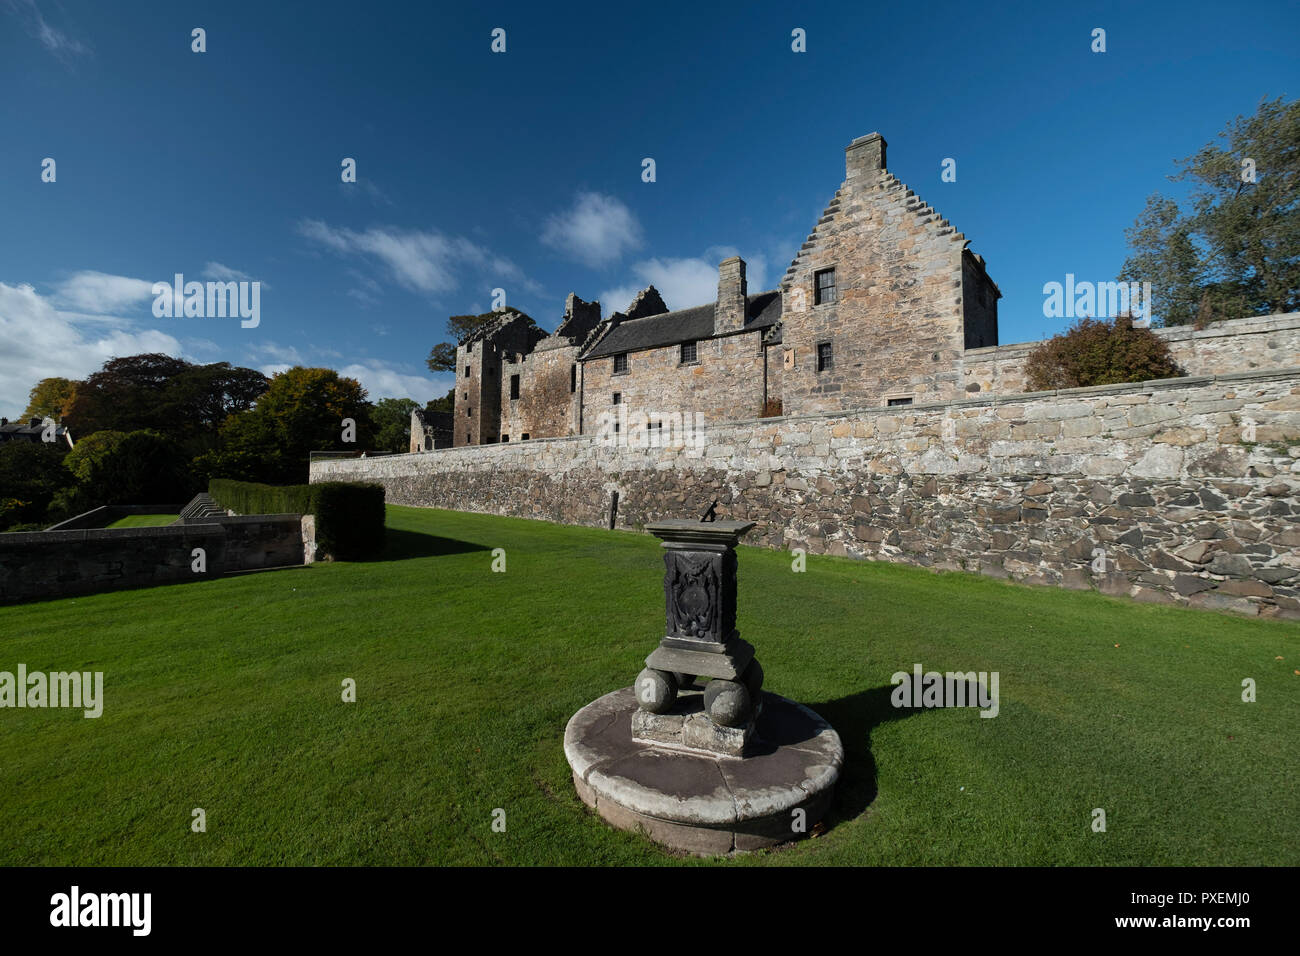 Aberlour Castillo con reloj de sol en los jardines, Fife, Escocia (cerca de Edimburgo). Foto de stock